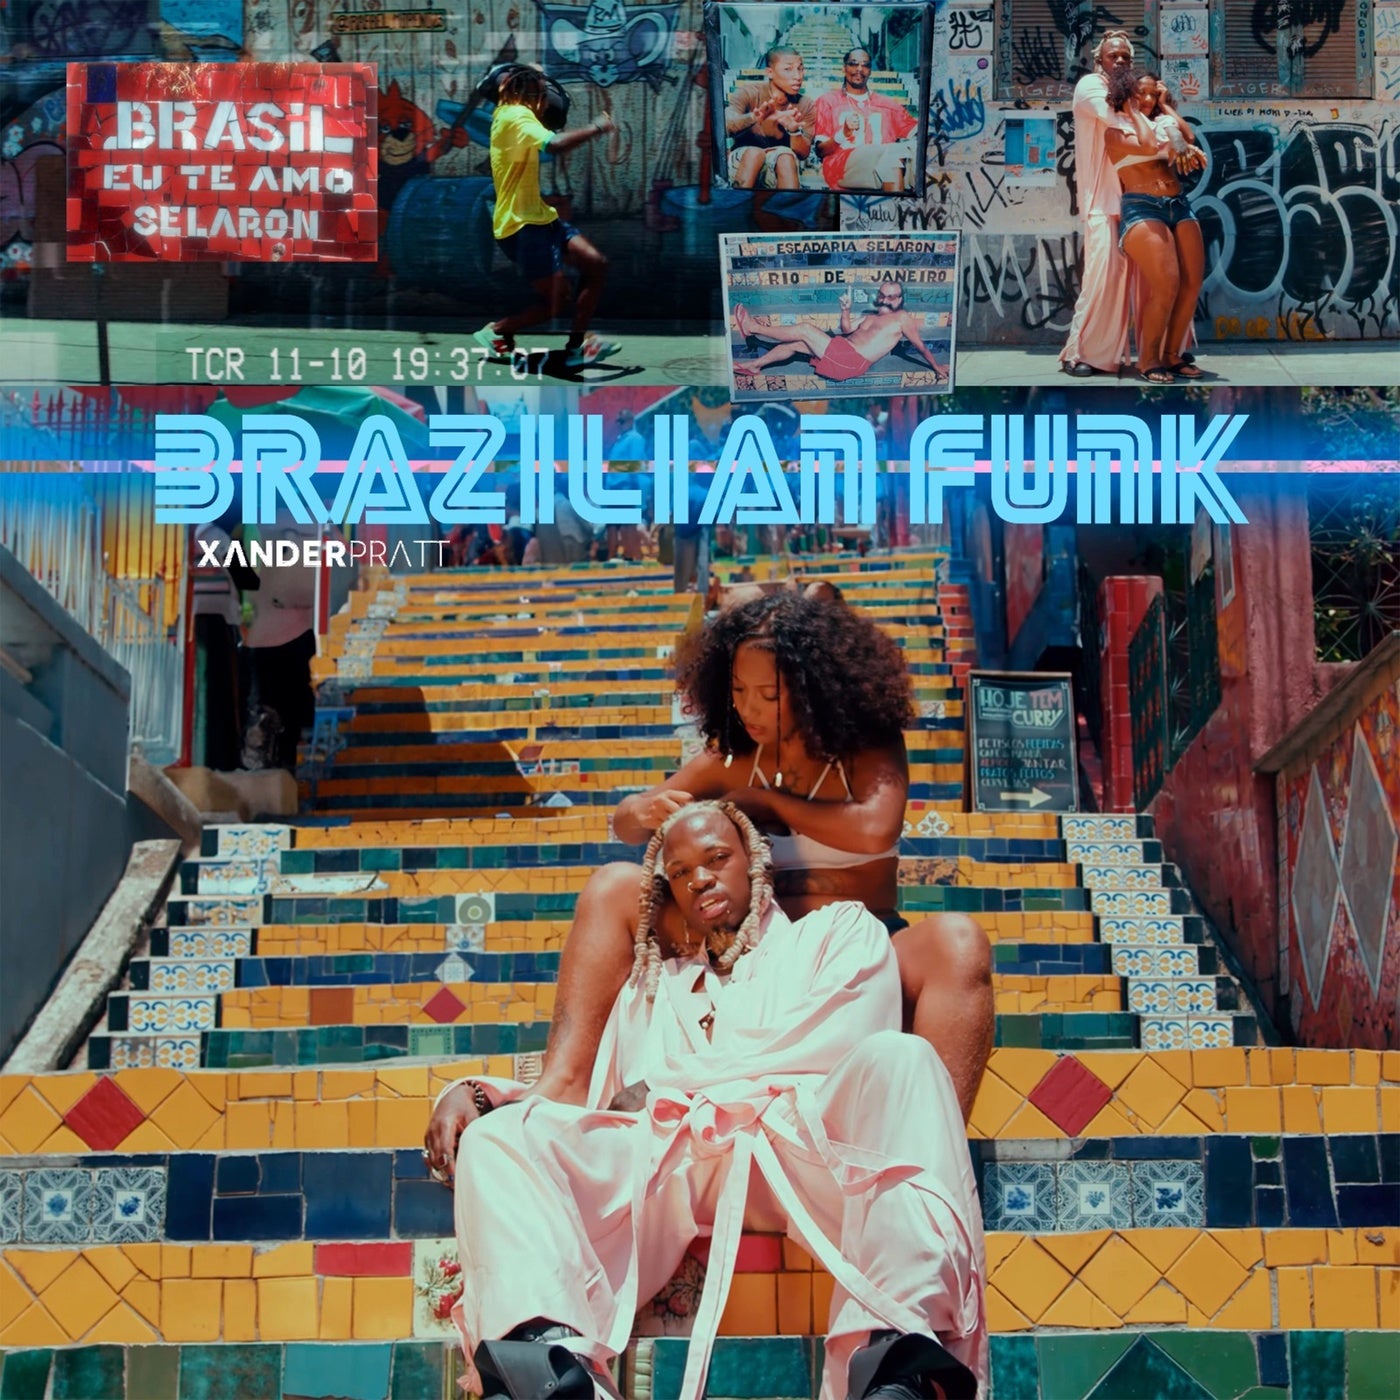 Brazilian Funk